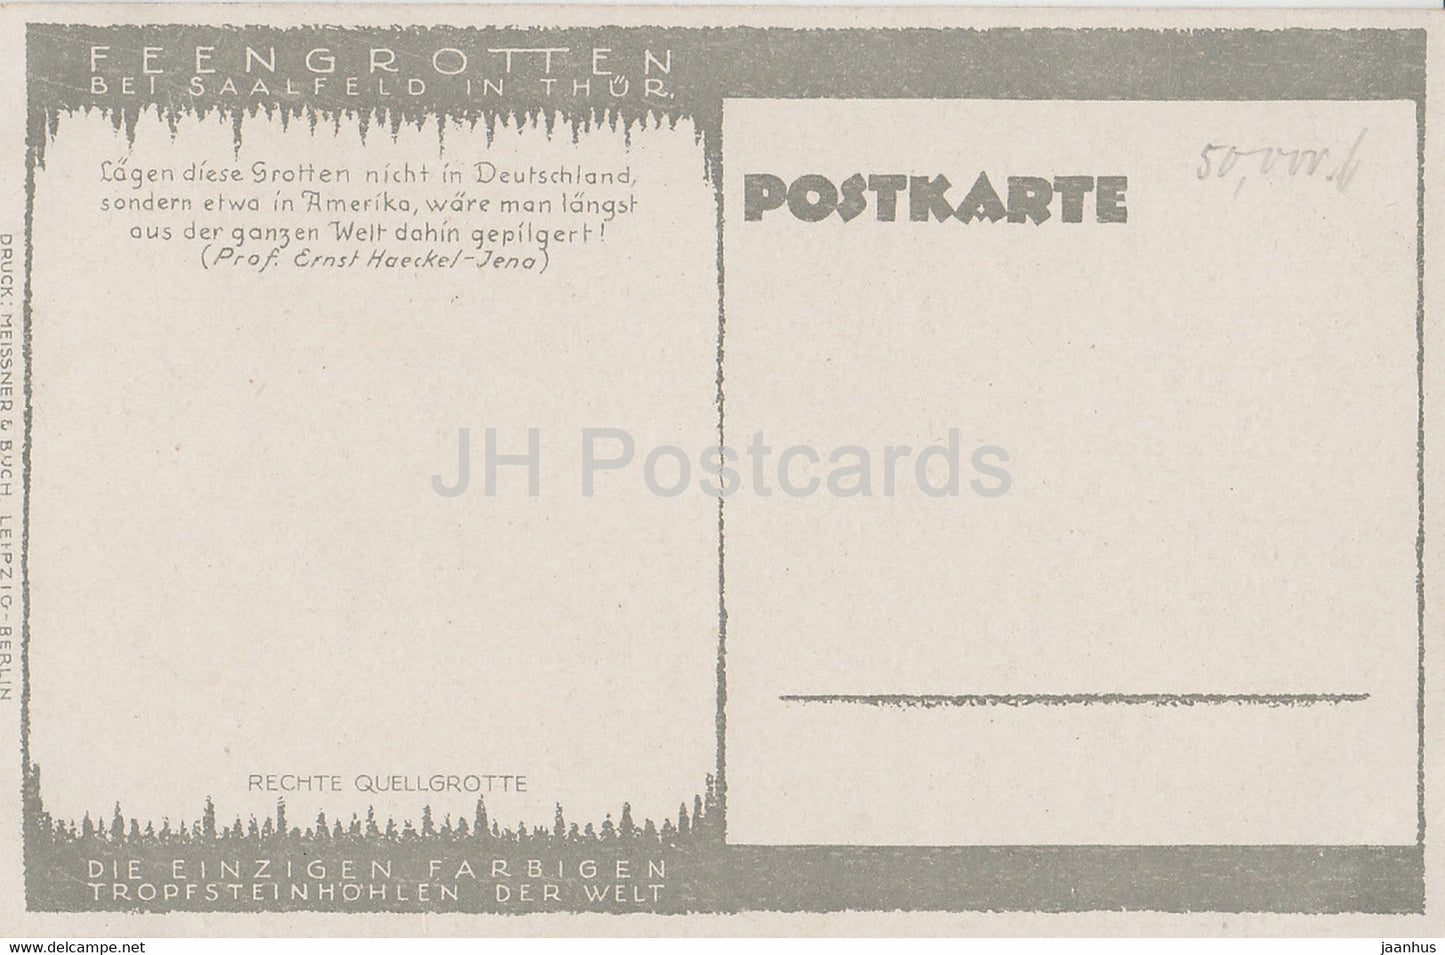 Feengrotten bei Saalfeld à Thur - Rechte Quellgrotte - grotte - carte postale ancienne - Allemagne - inutilisée